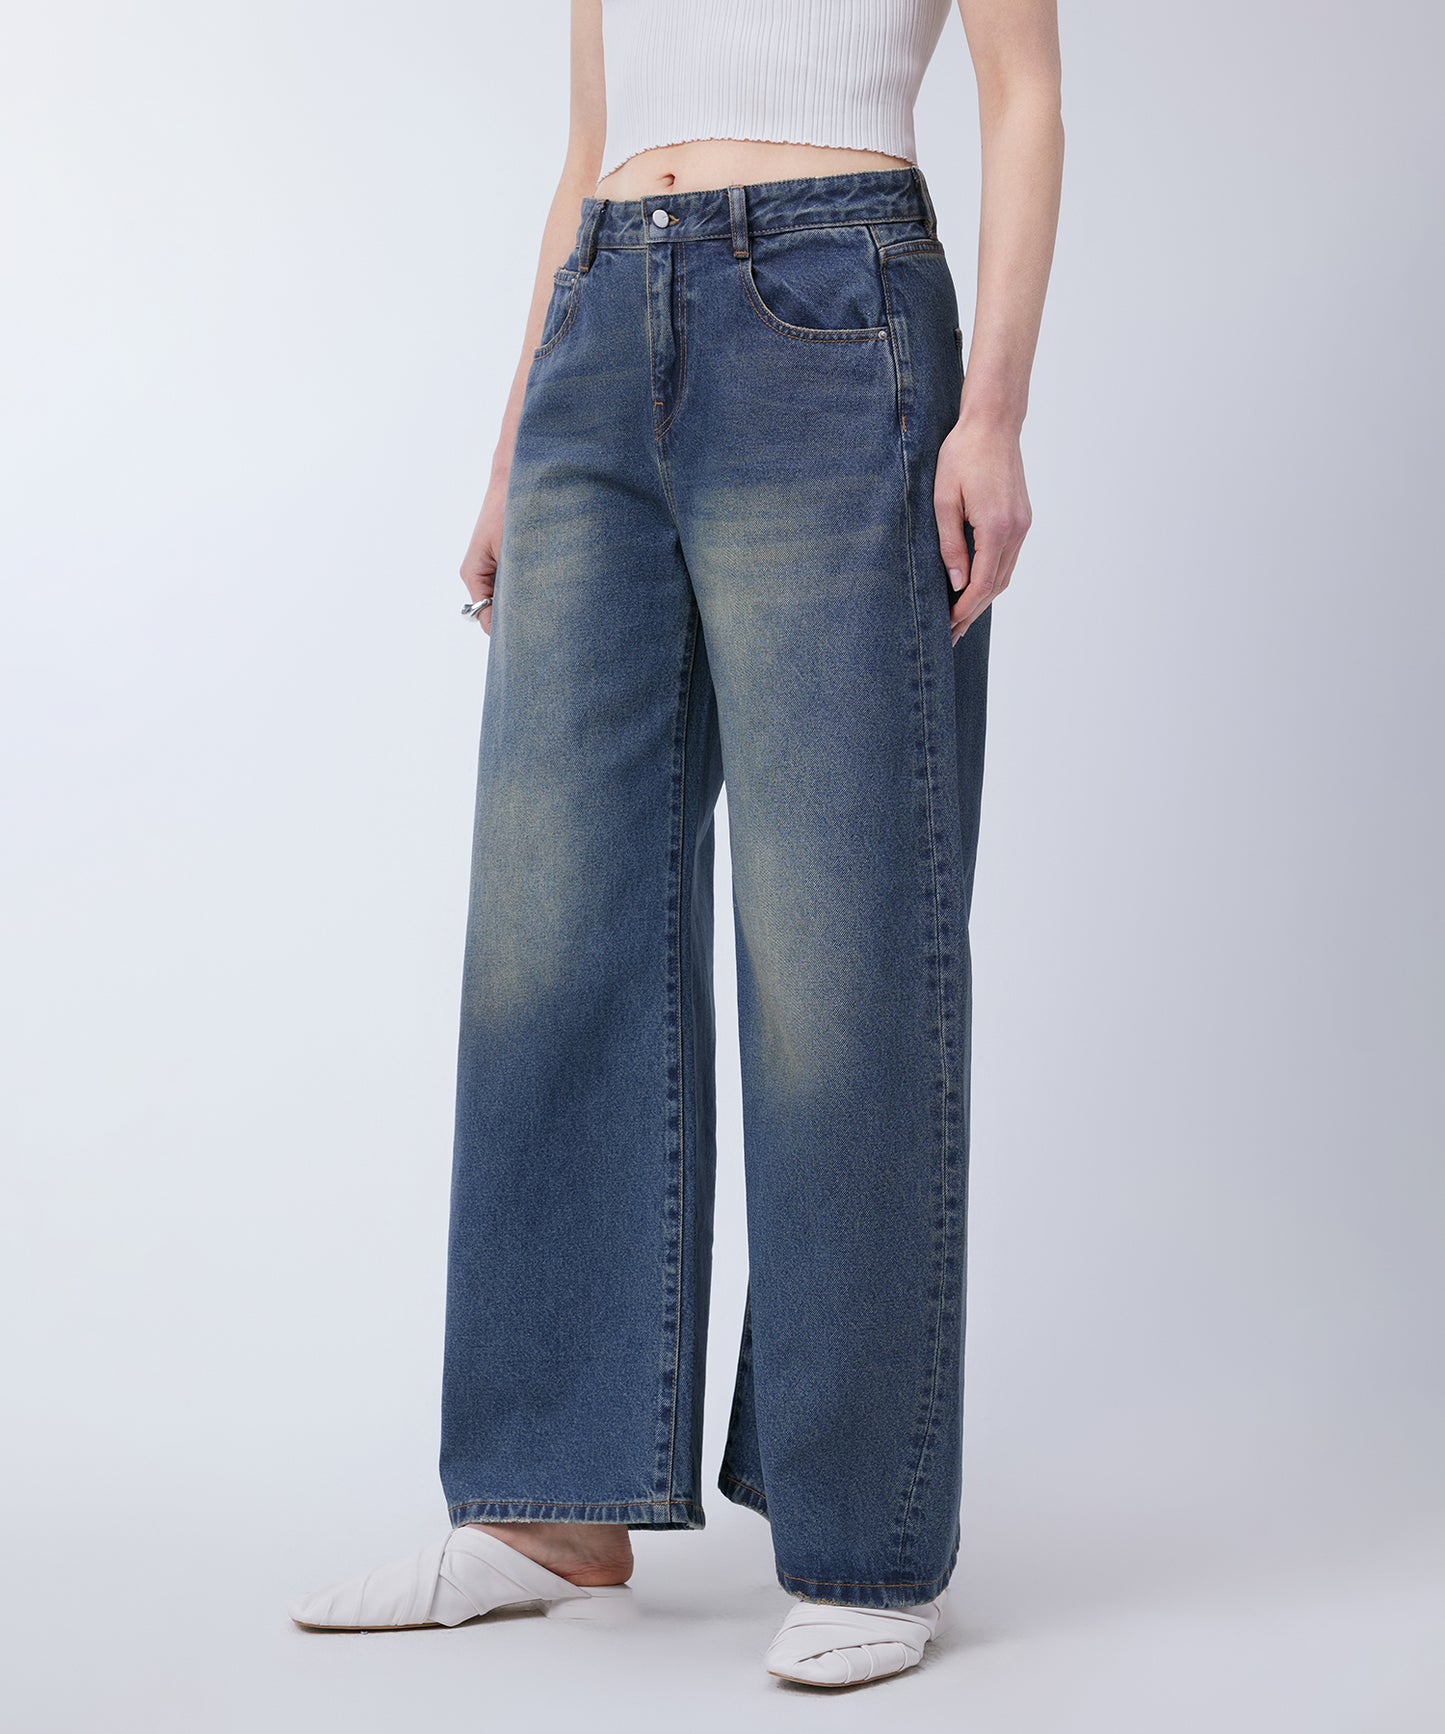 Unique Curved Loose-Fit Jeans